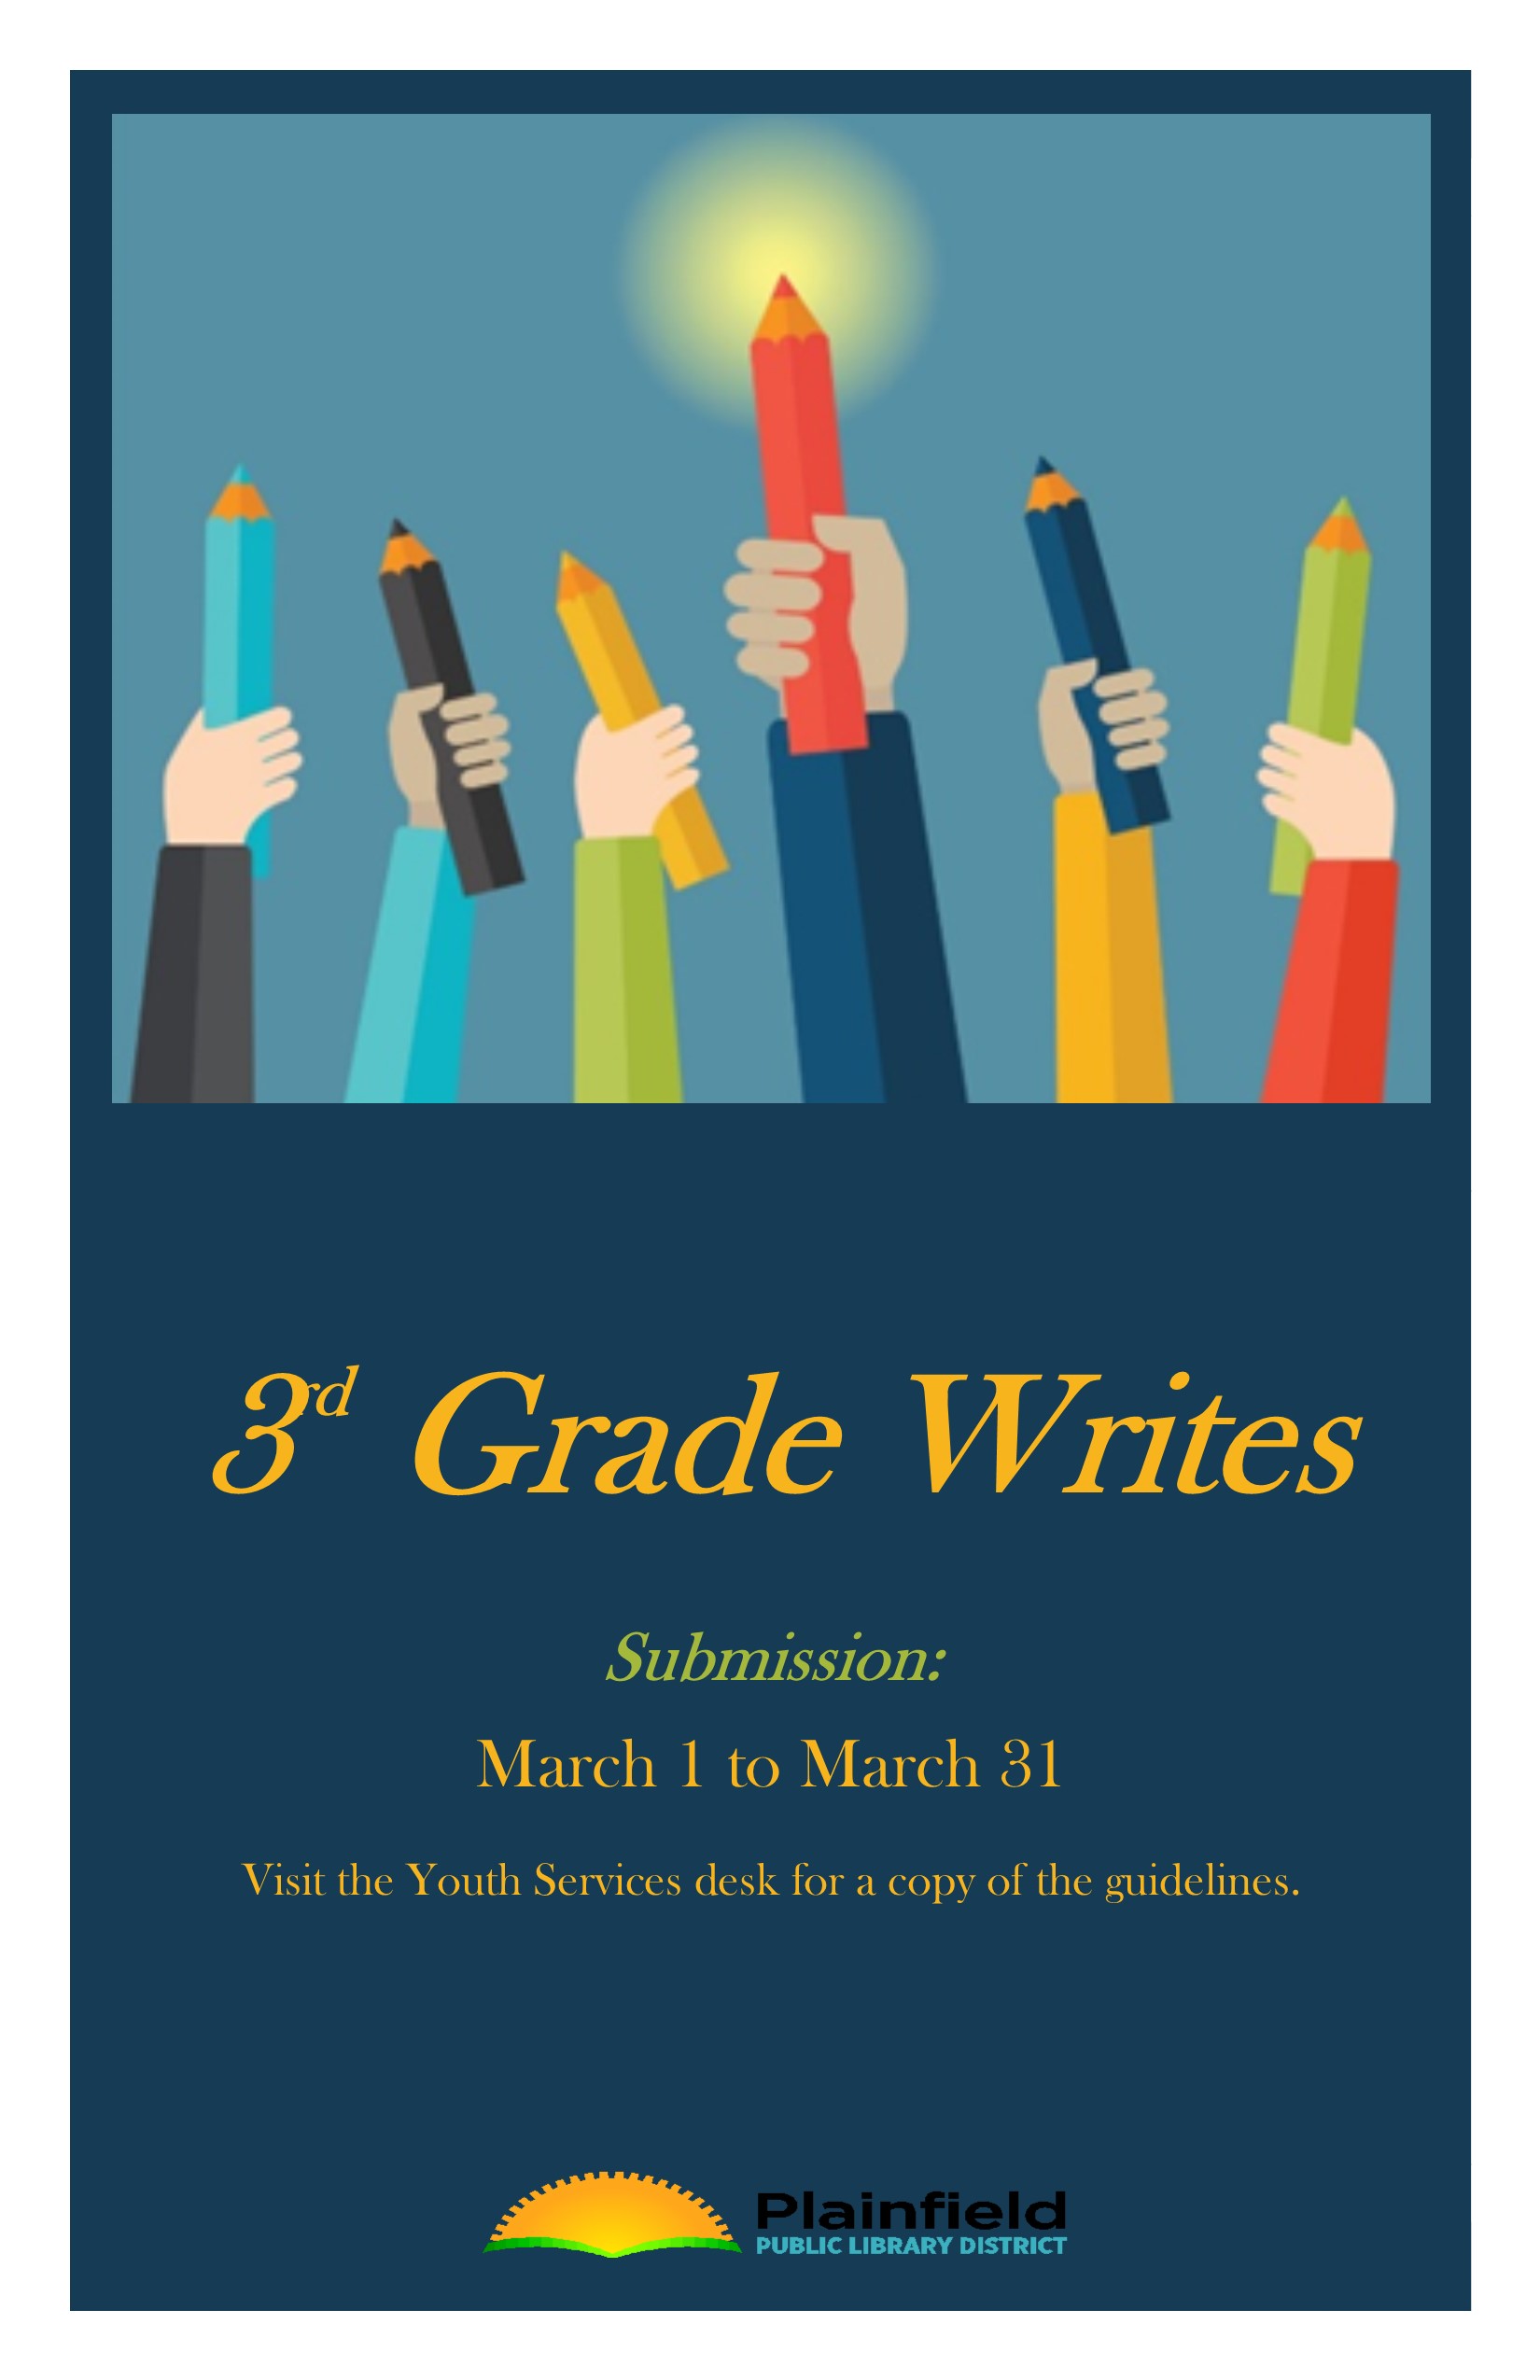 3rd Grade Writes event poster